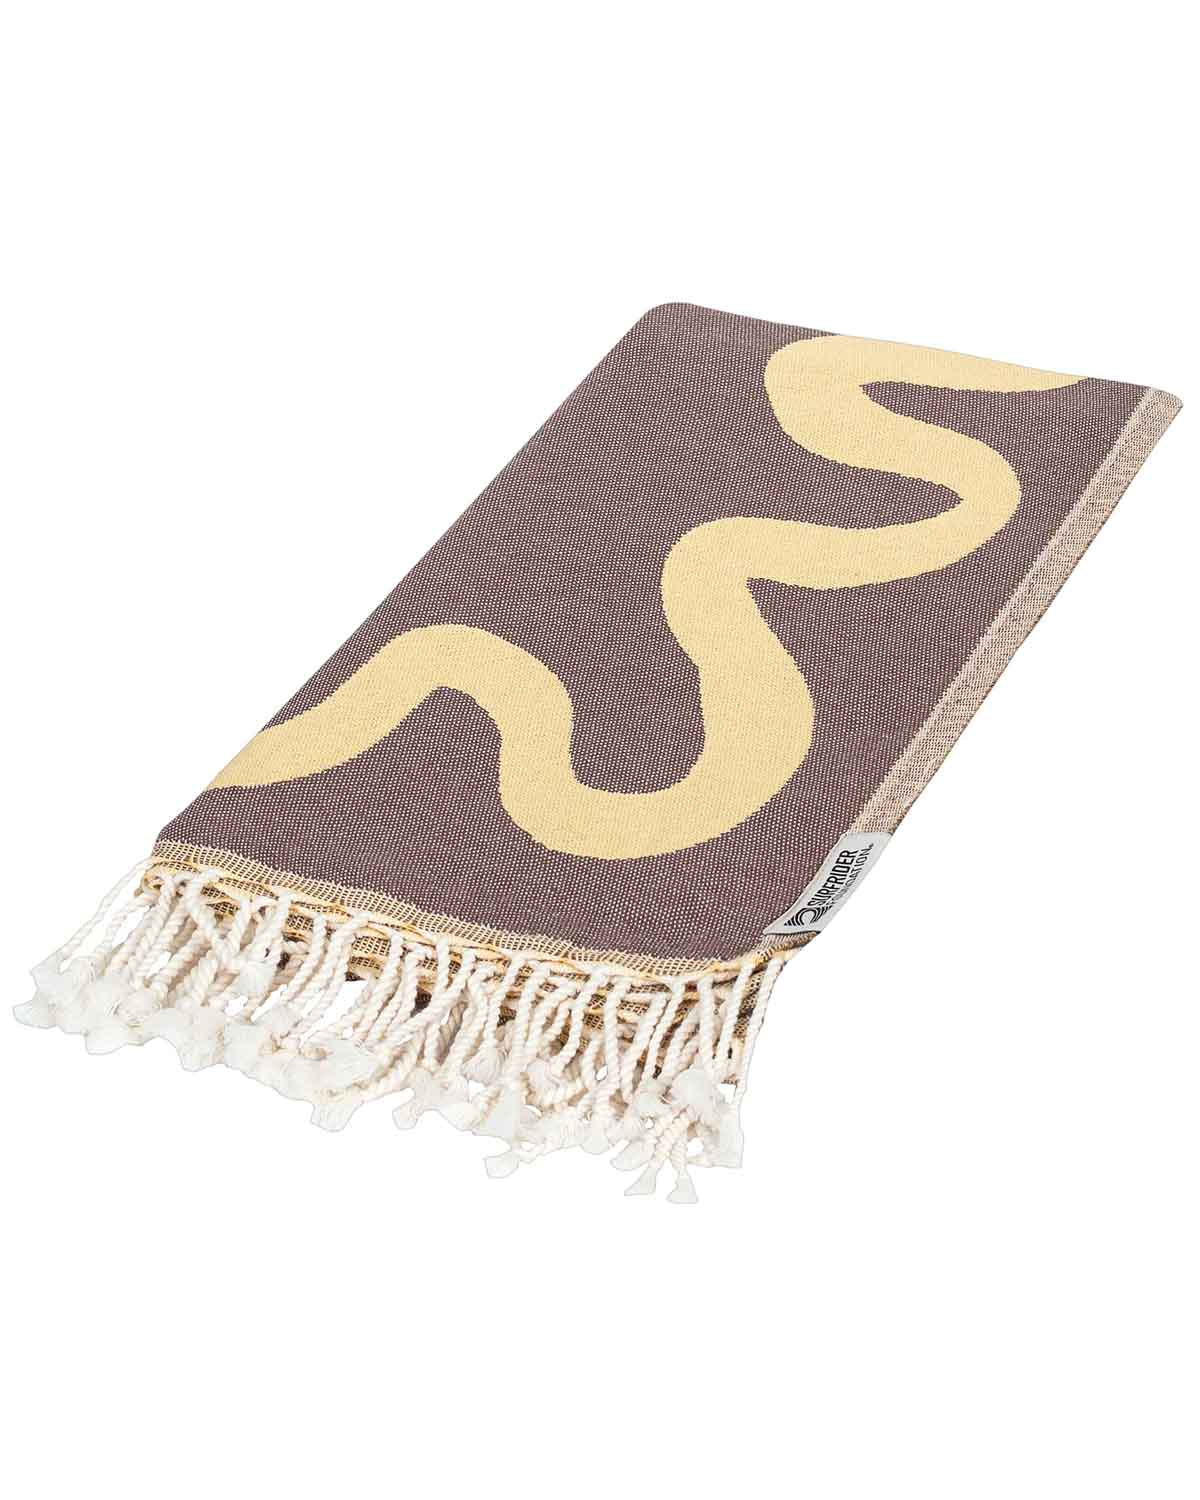 Sand Cloud x Surfrider Ripple Towel